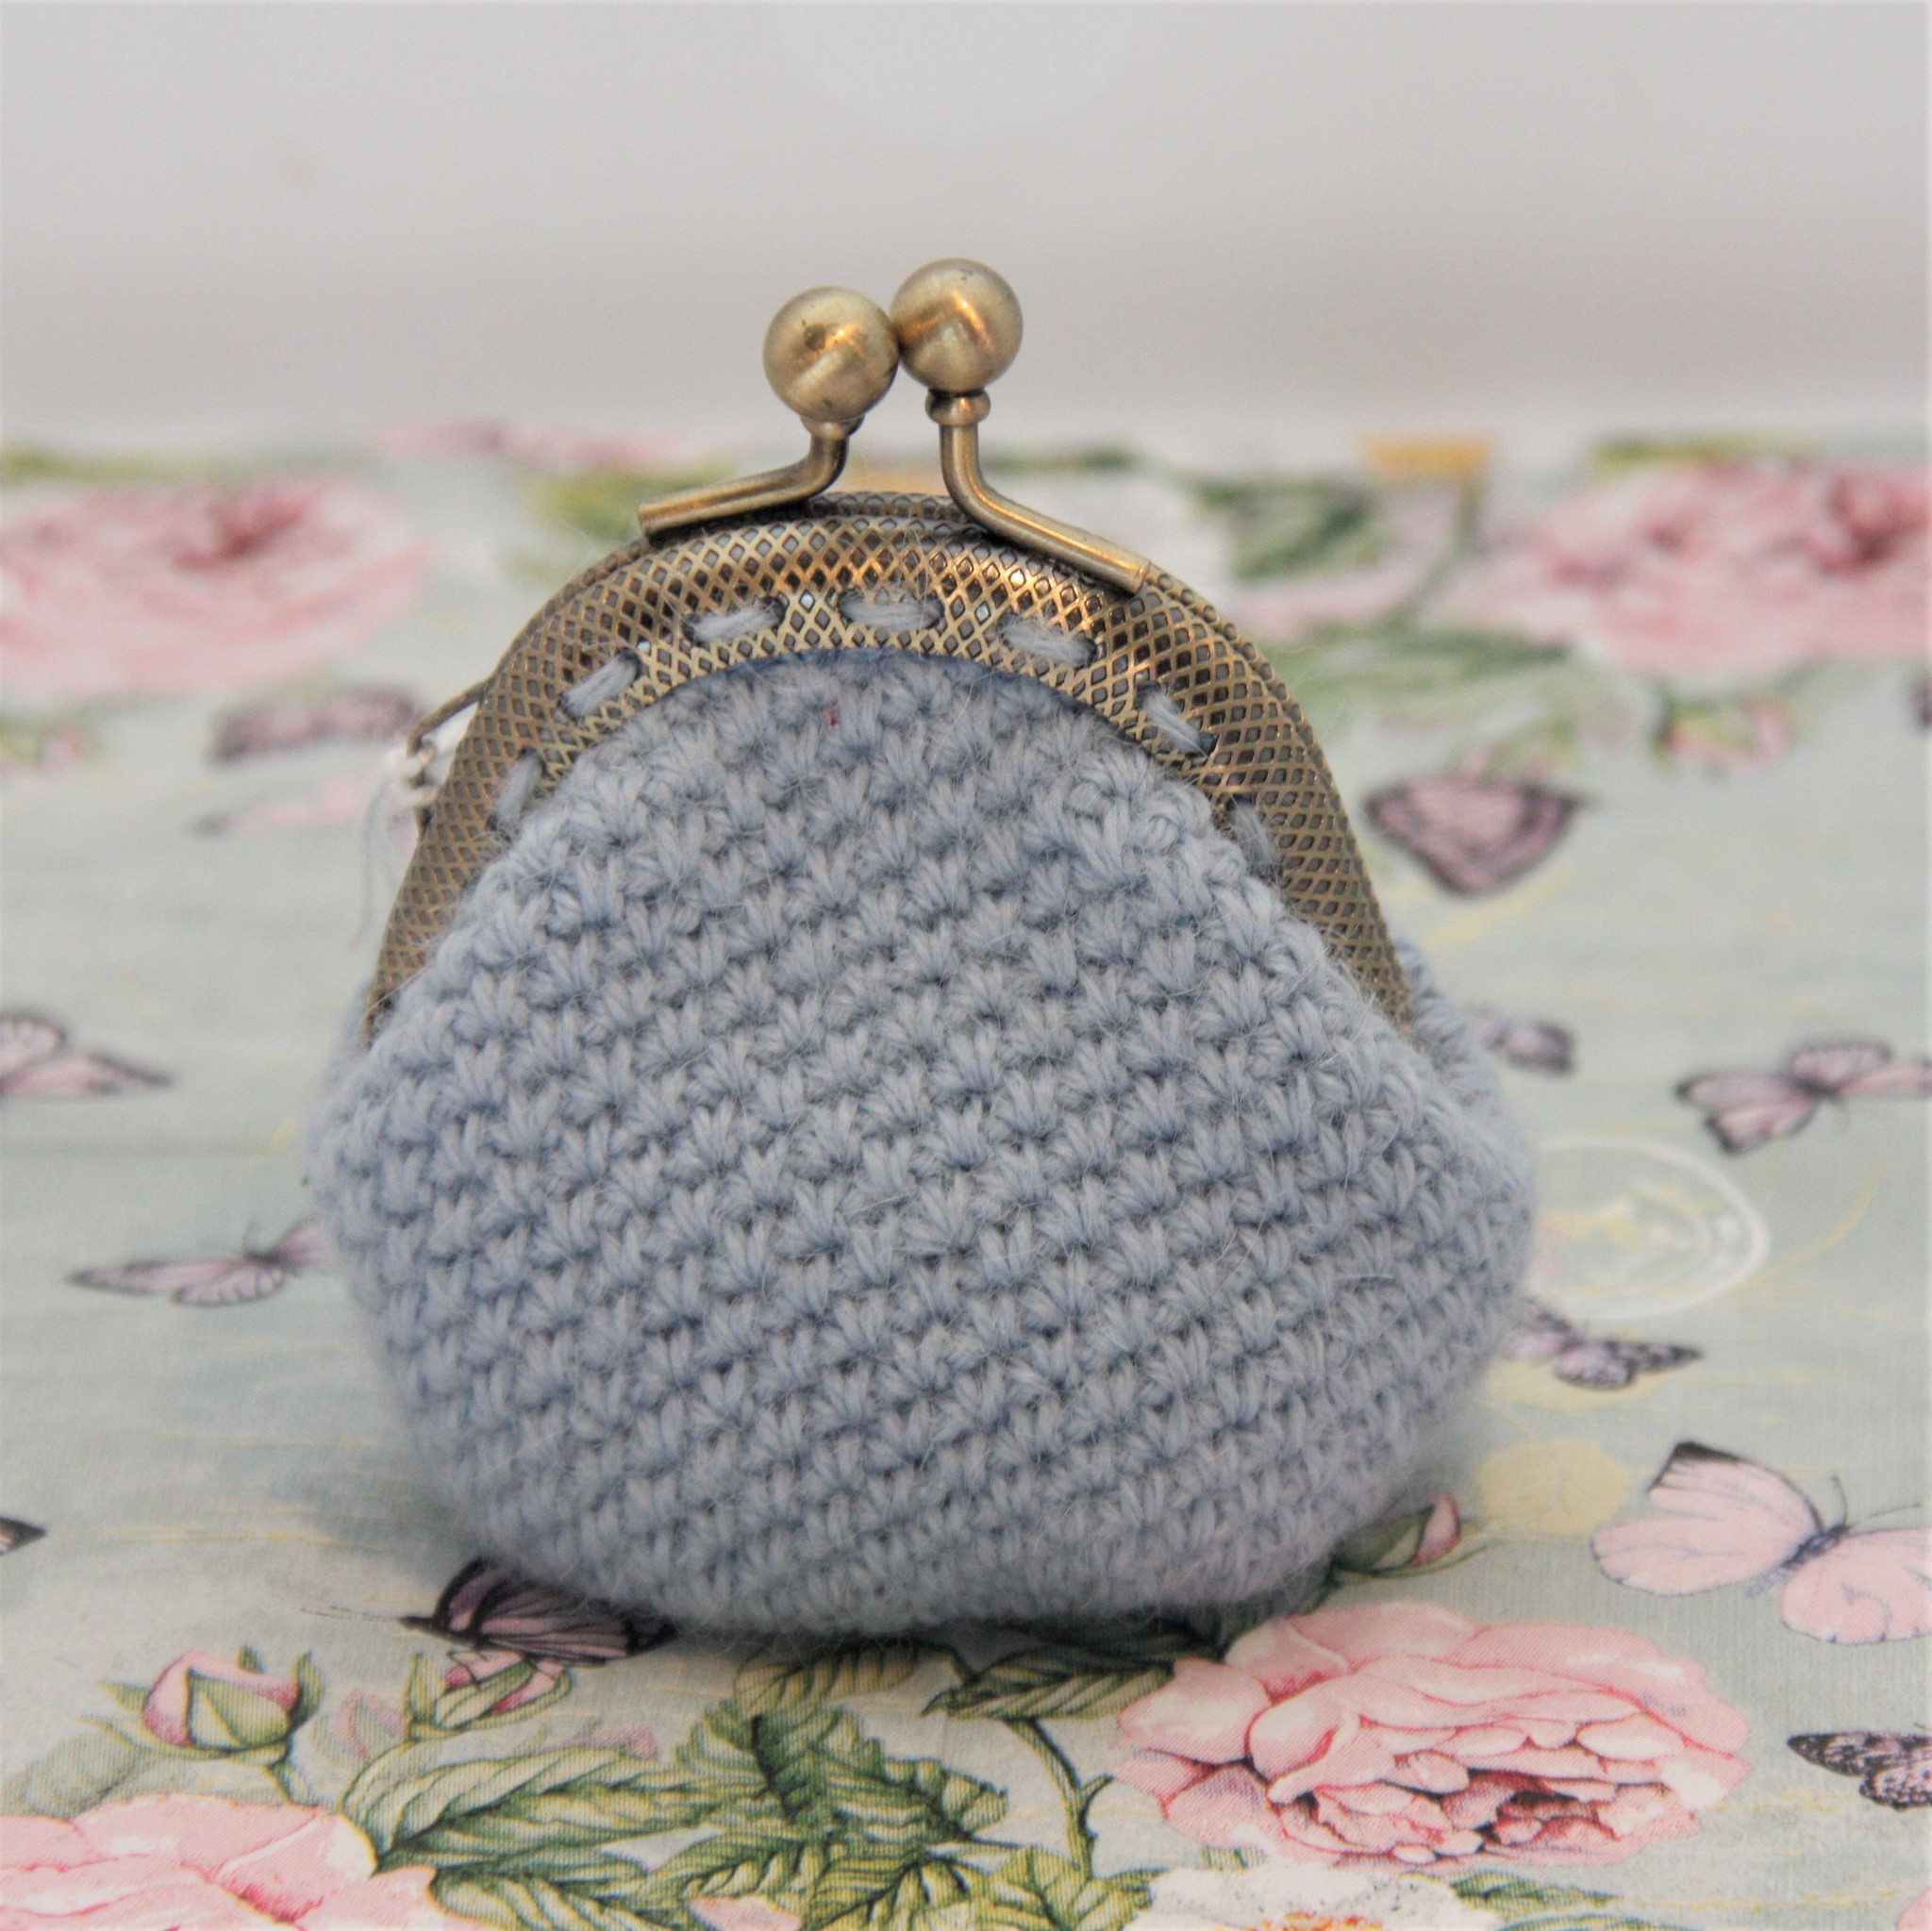 Crochet purse